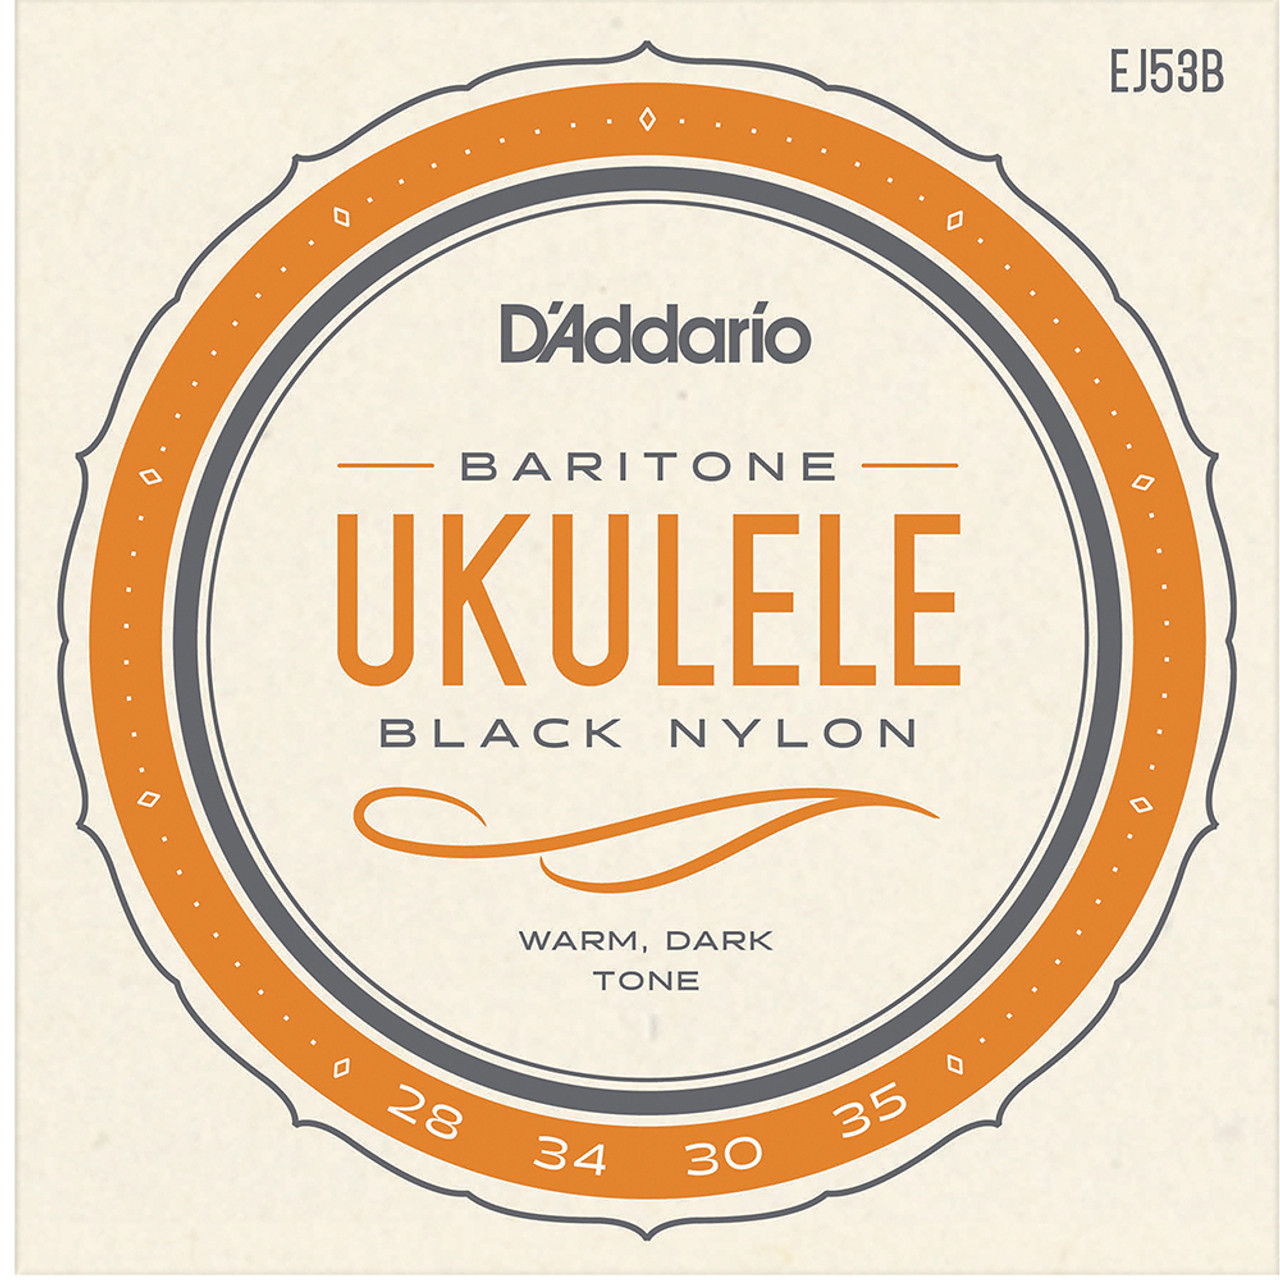 D'Addario EJ53B Baritone Black Nylon Ukulele Strings